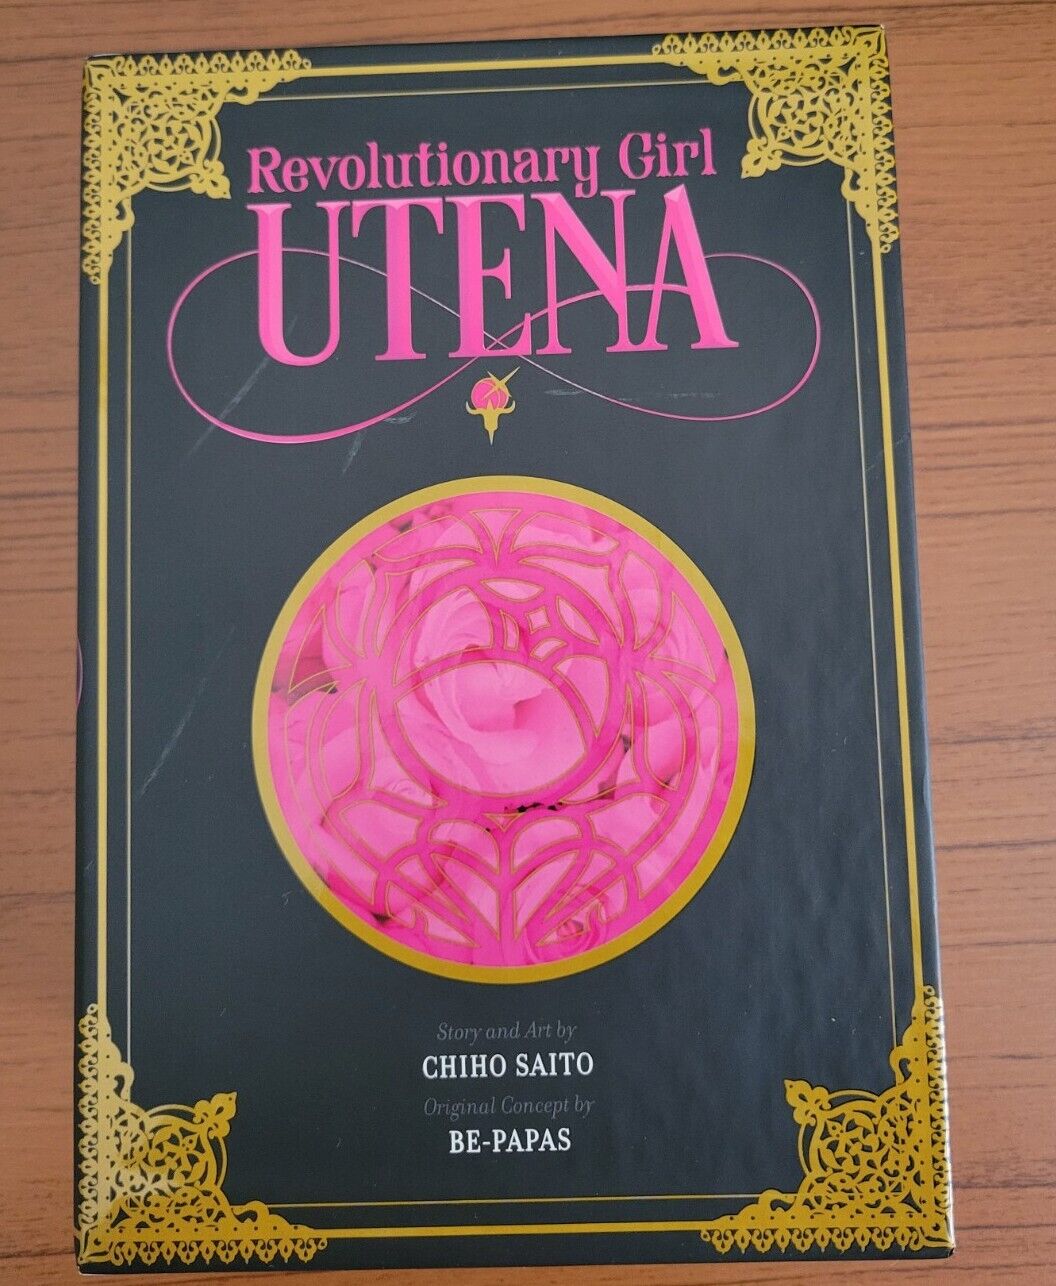 Revolutionary Girl Utena Complete Deluxe Box Set, Manga, Hardcover, Chiho Saito